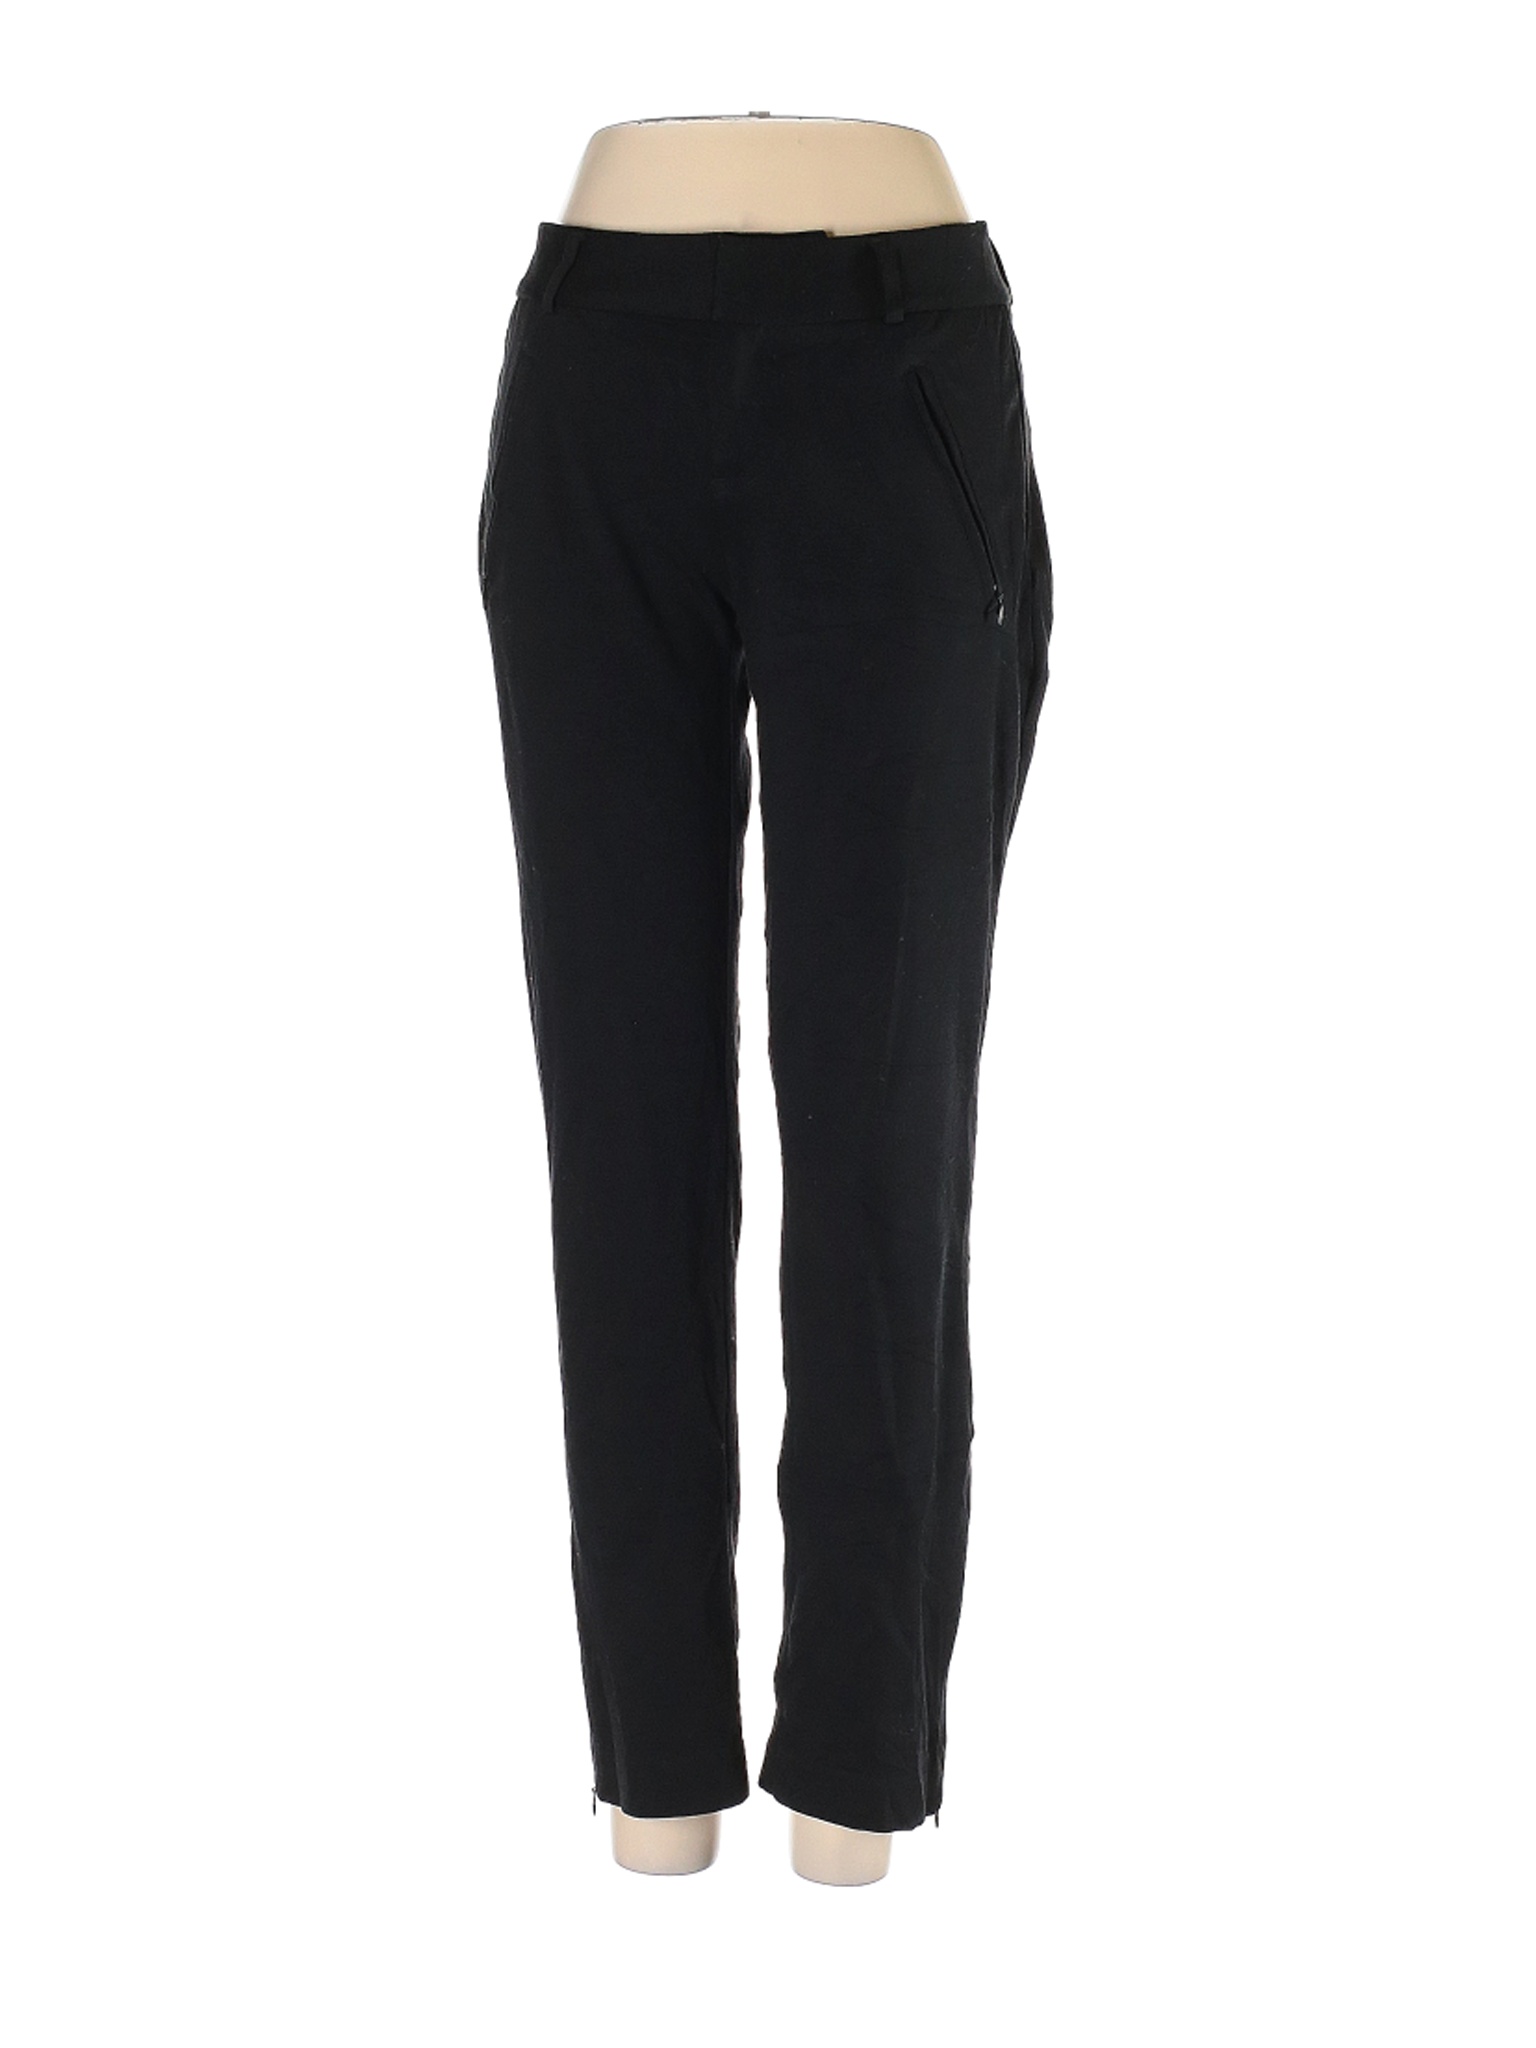 MICHAEL Michael Kors Women Black Dress Pants 4 | eBay